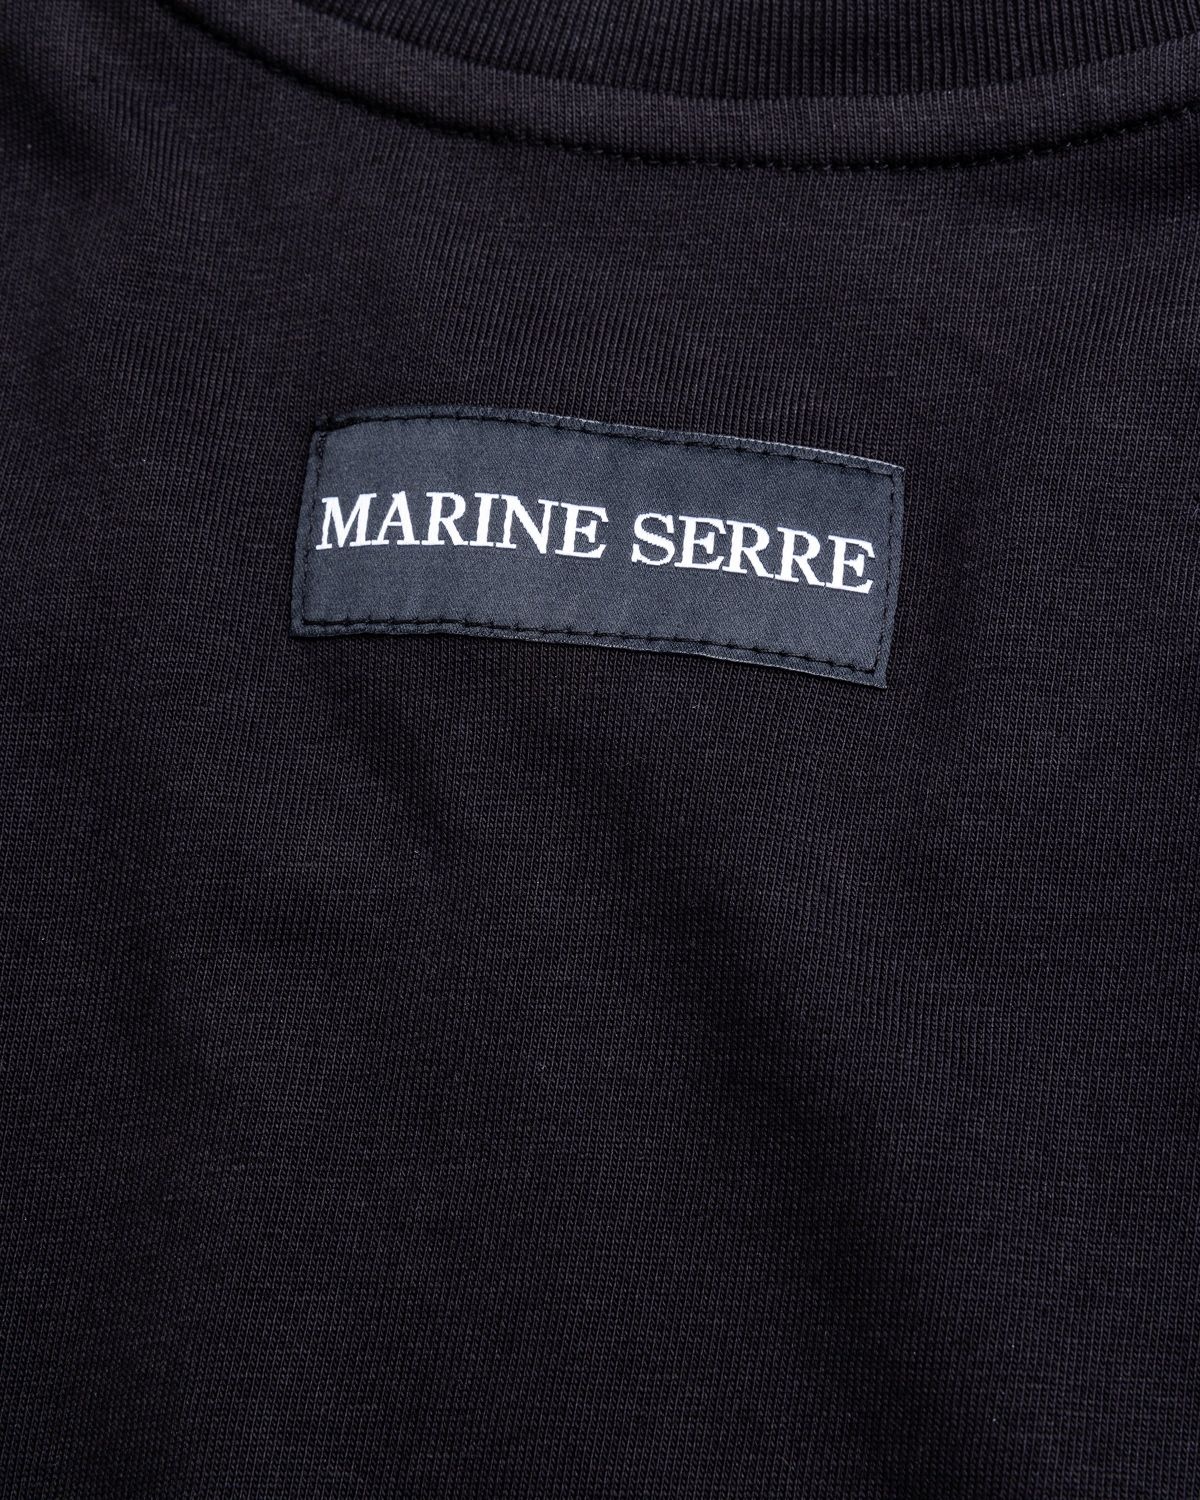 Marine Serre – Organic Cotton Jersey Plain Tank Top Black - 7